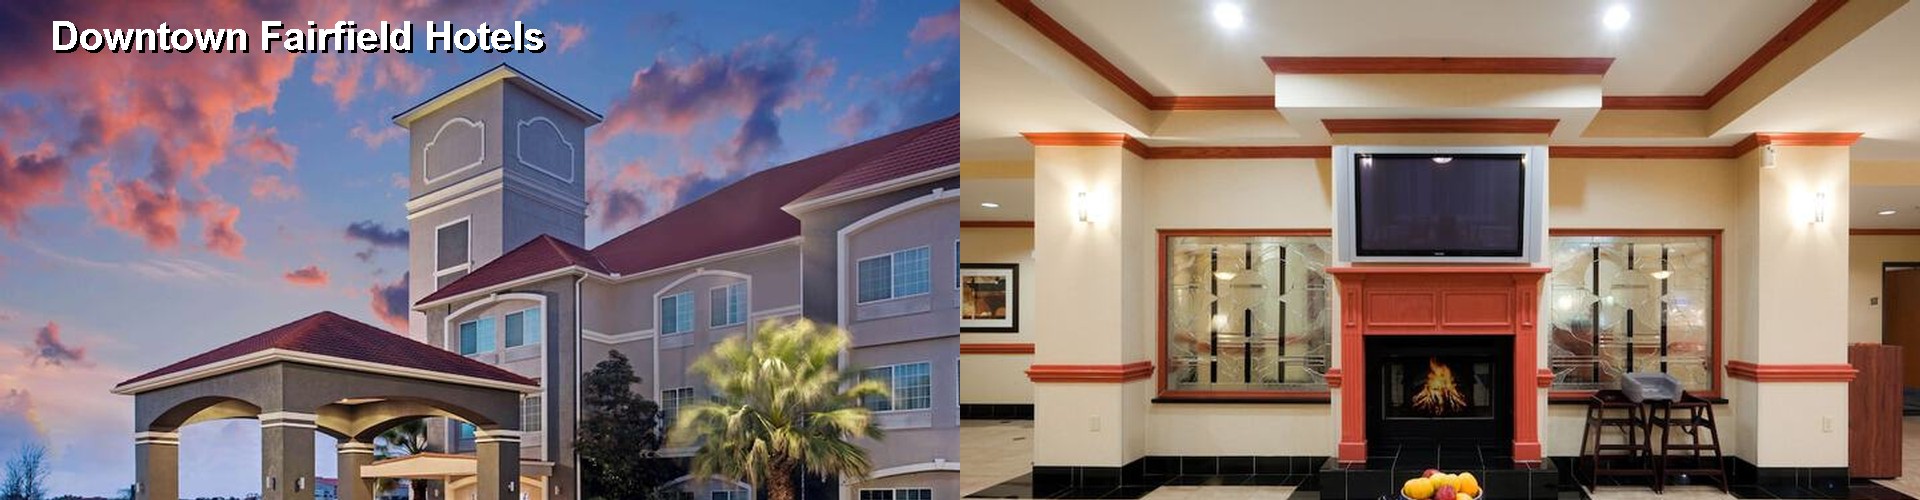 4 Best Hotels near Downtown Fairfield